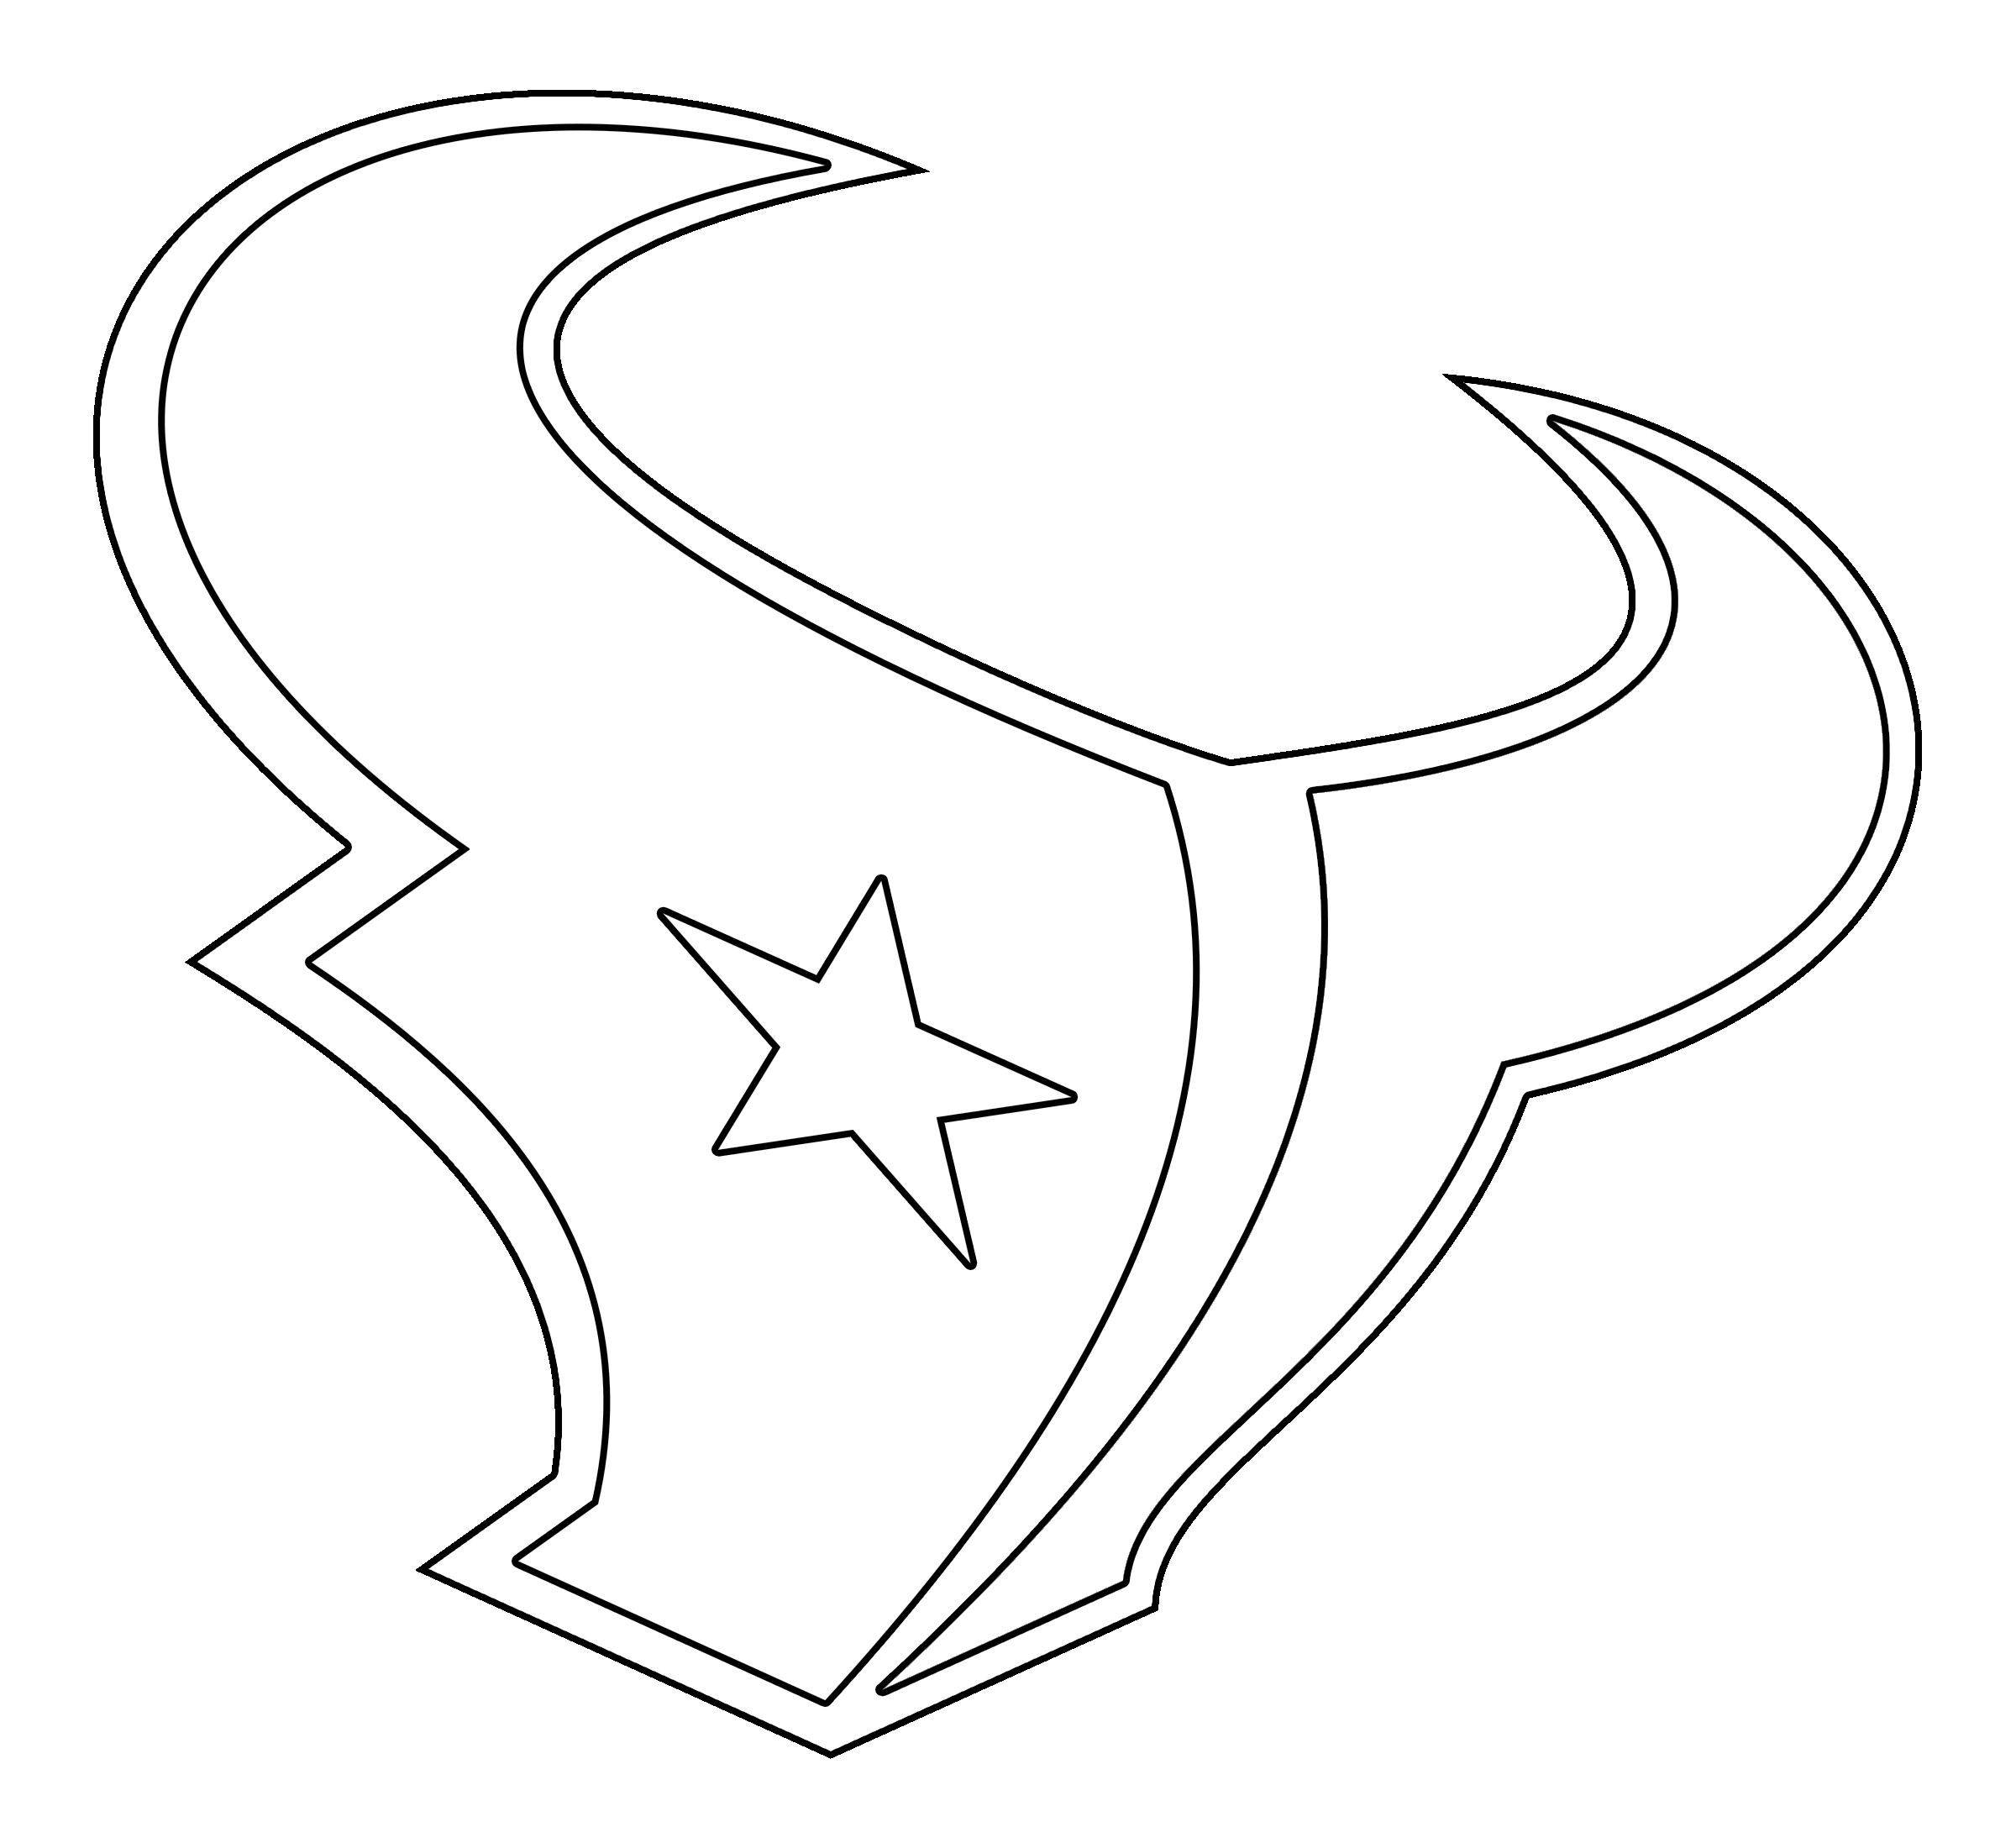 Houston Texans Logo PNG Transparent & SVG Vector - Freebie Supply